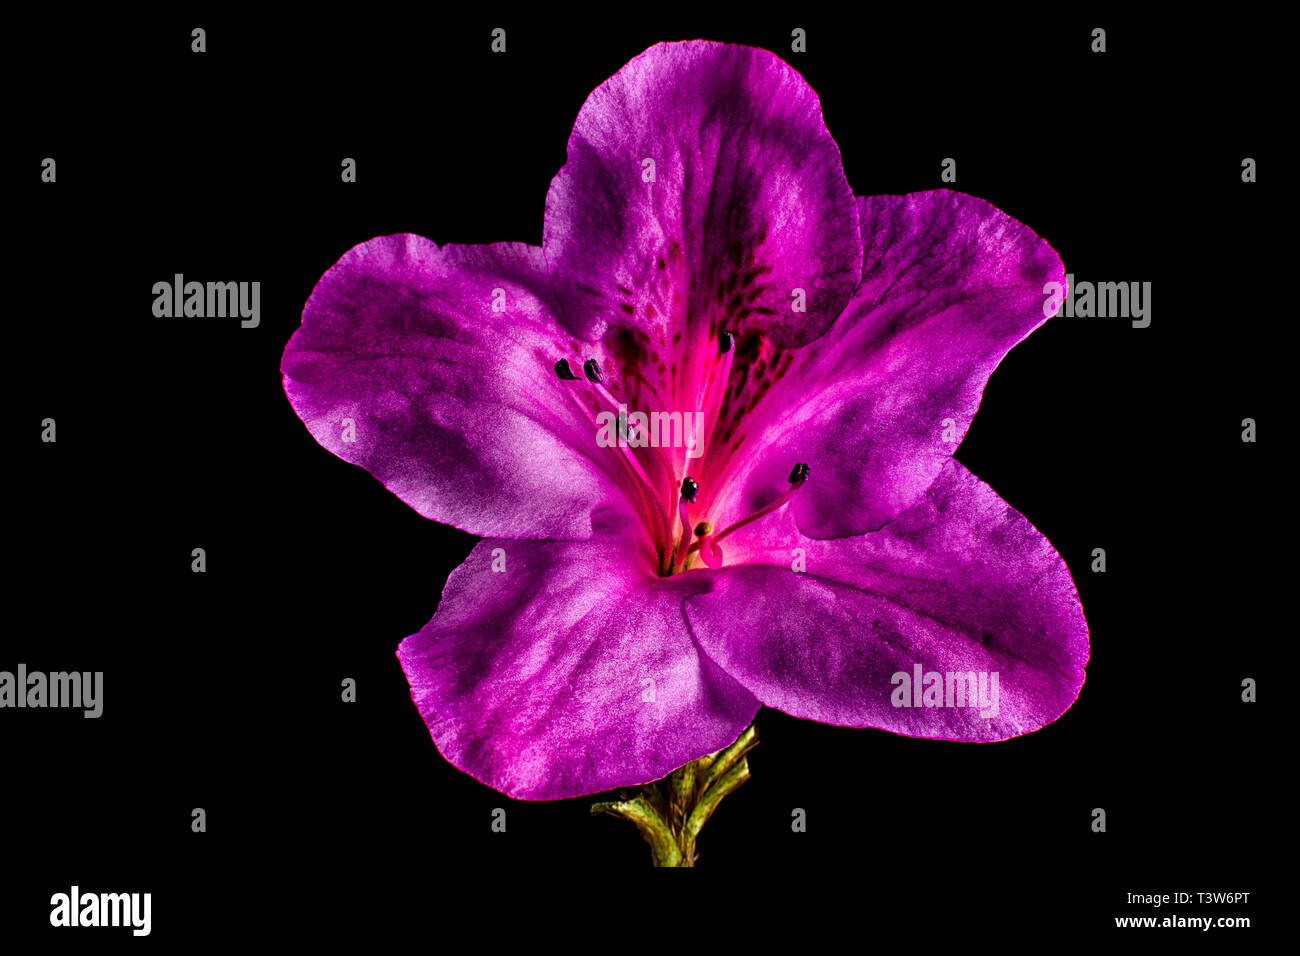 mirabilis flower macro on black background Stock Photo